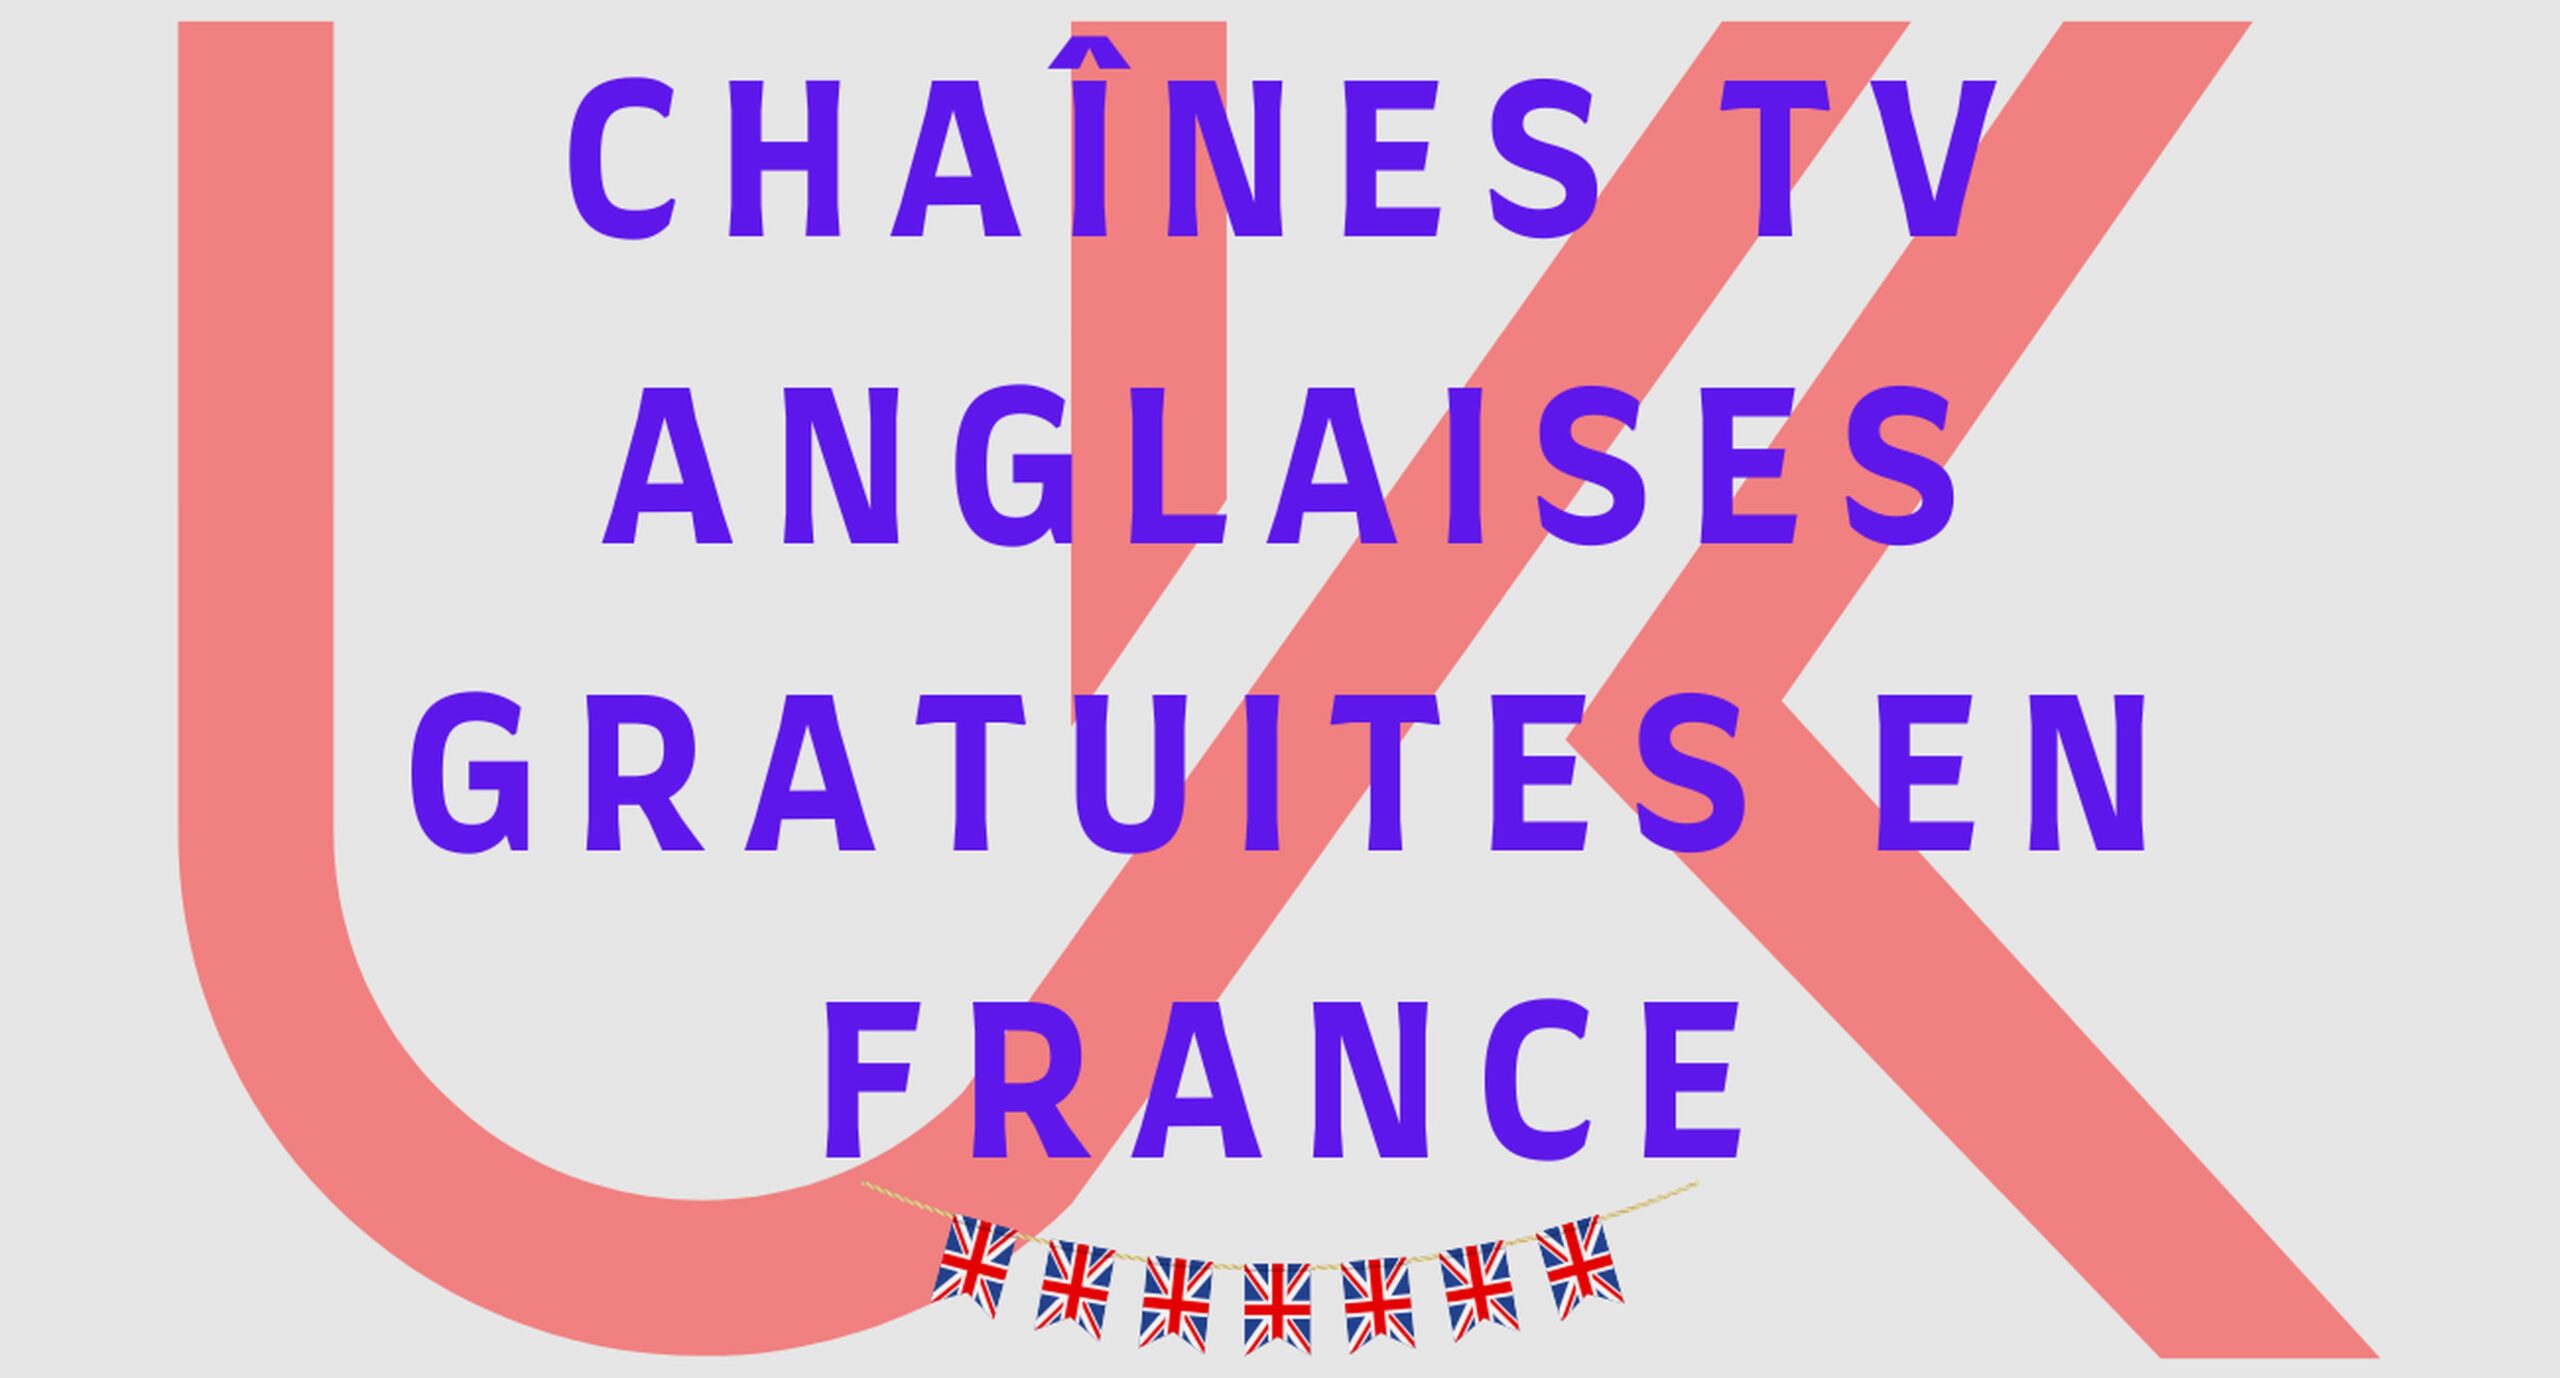 Chaînes TV Anglaises gratuites en France - 55 Chaînes TV disponibles 5